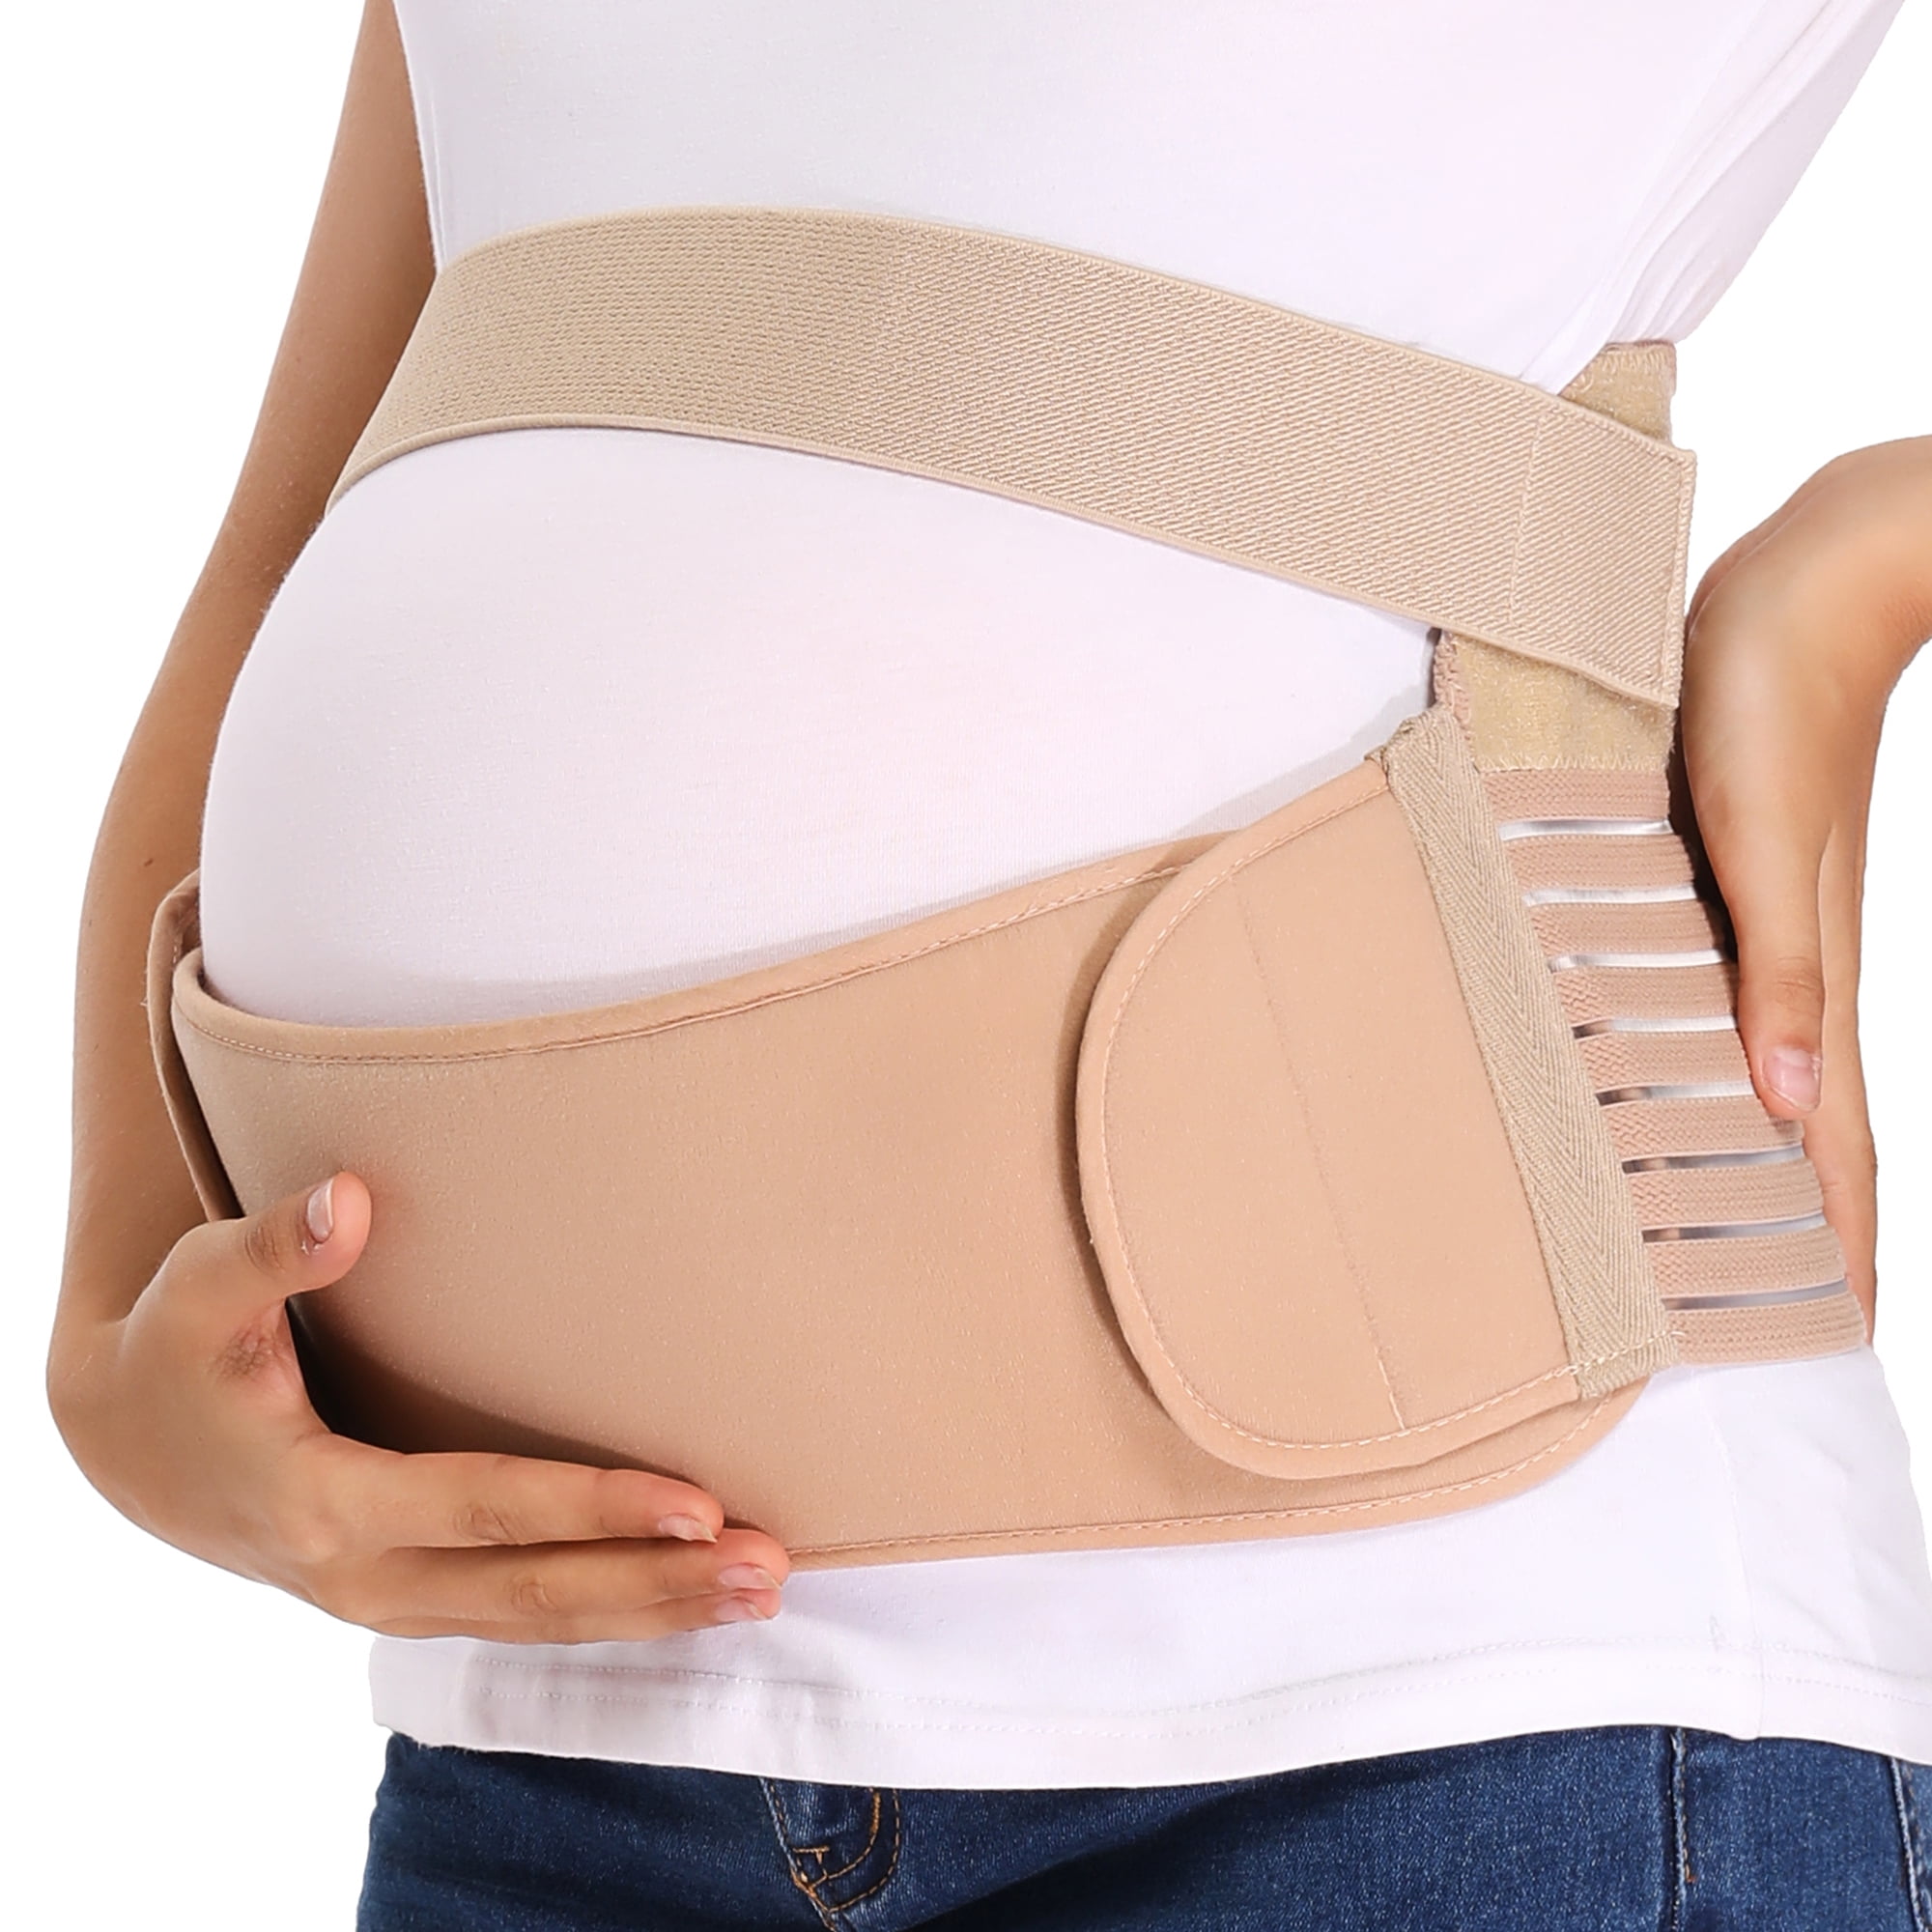 CFR Maternity Support Belt Waist Pregnant Belly Band Lumbar Medical Brace NHS 